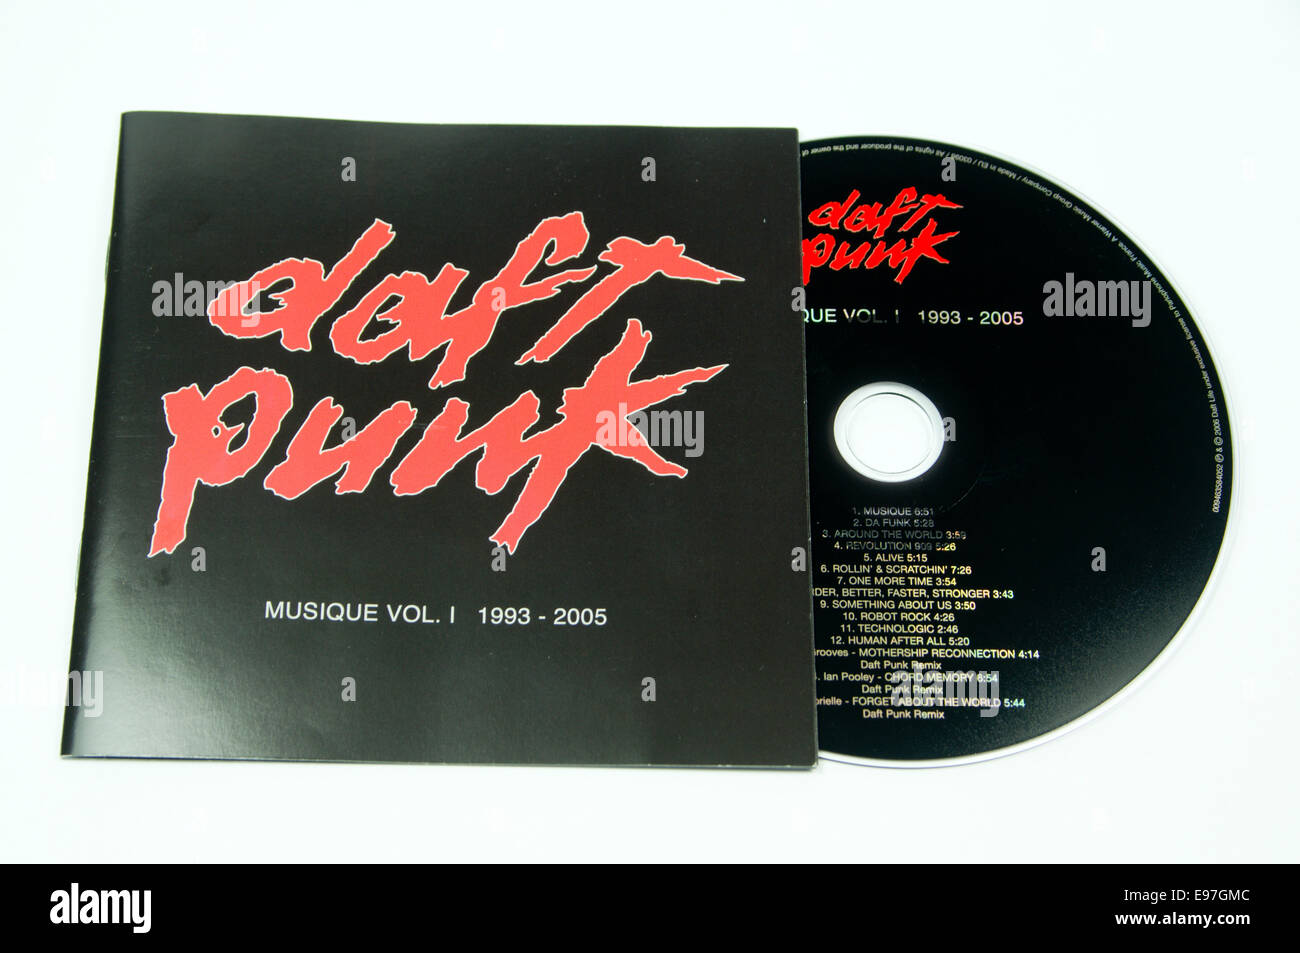 I Daft Punk Musique vol 1 Album compact disc. Foto Stock